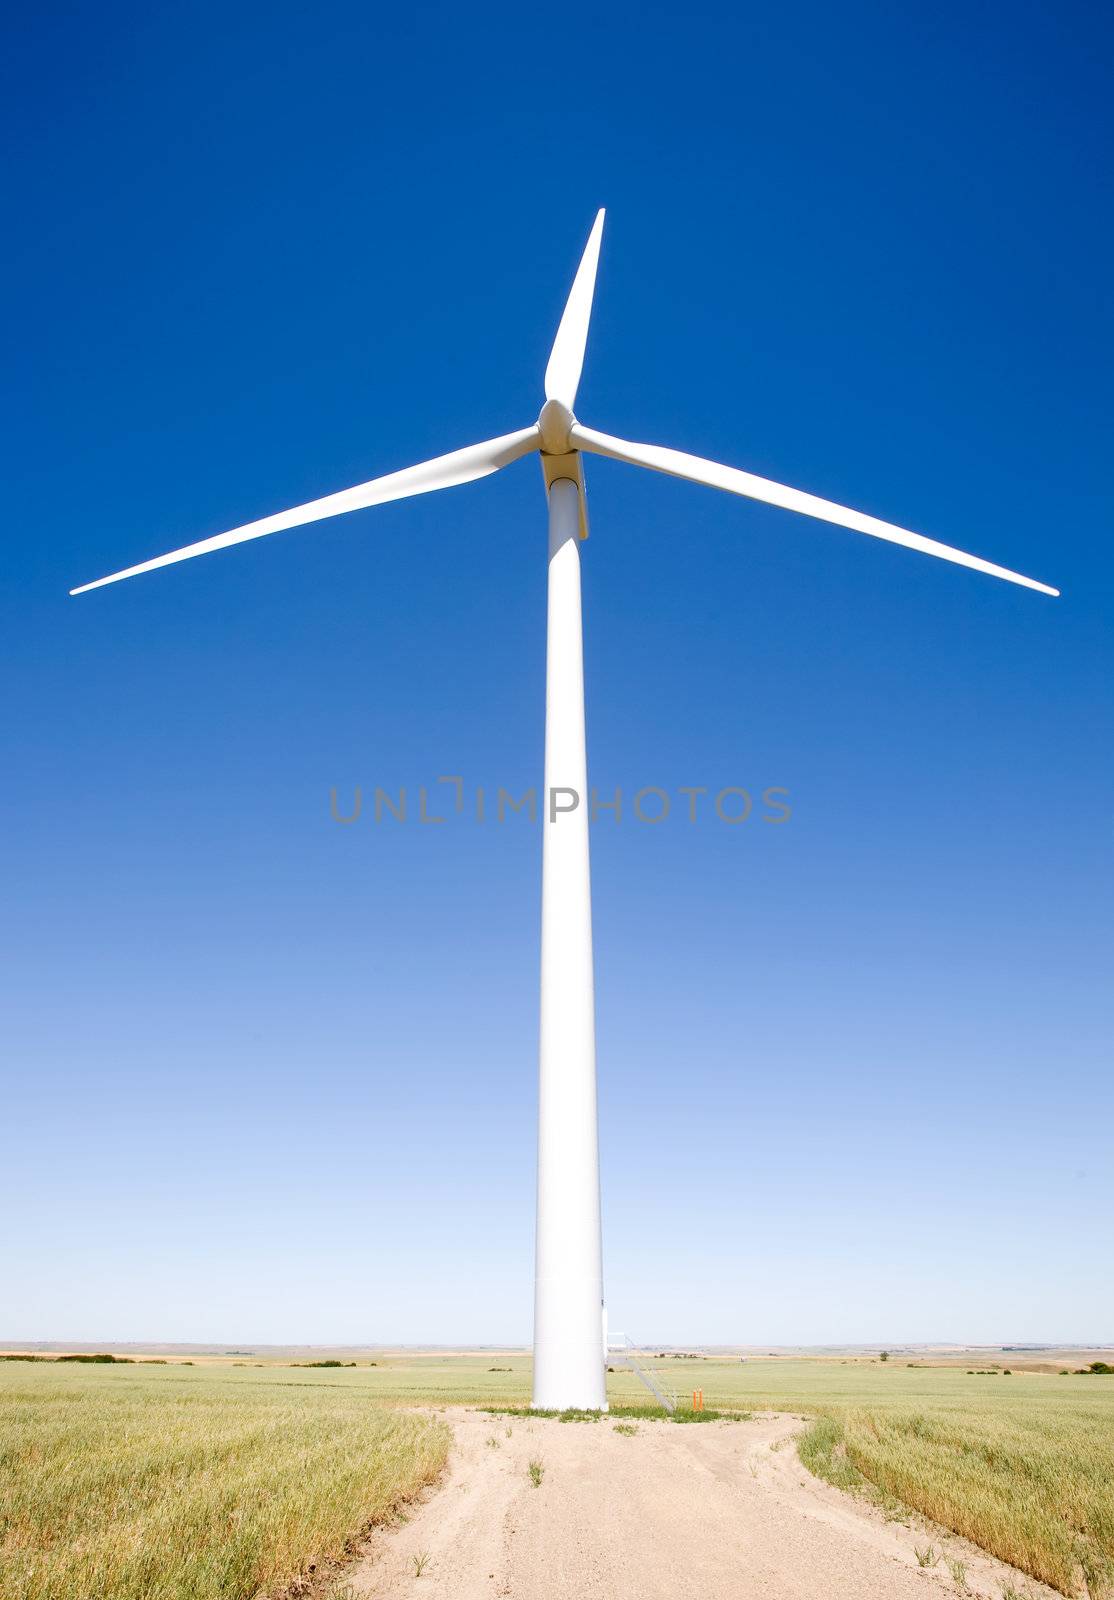 A wind turbine on the flat prairie viewed from below